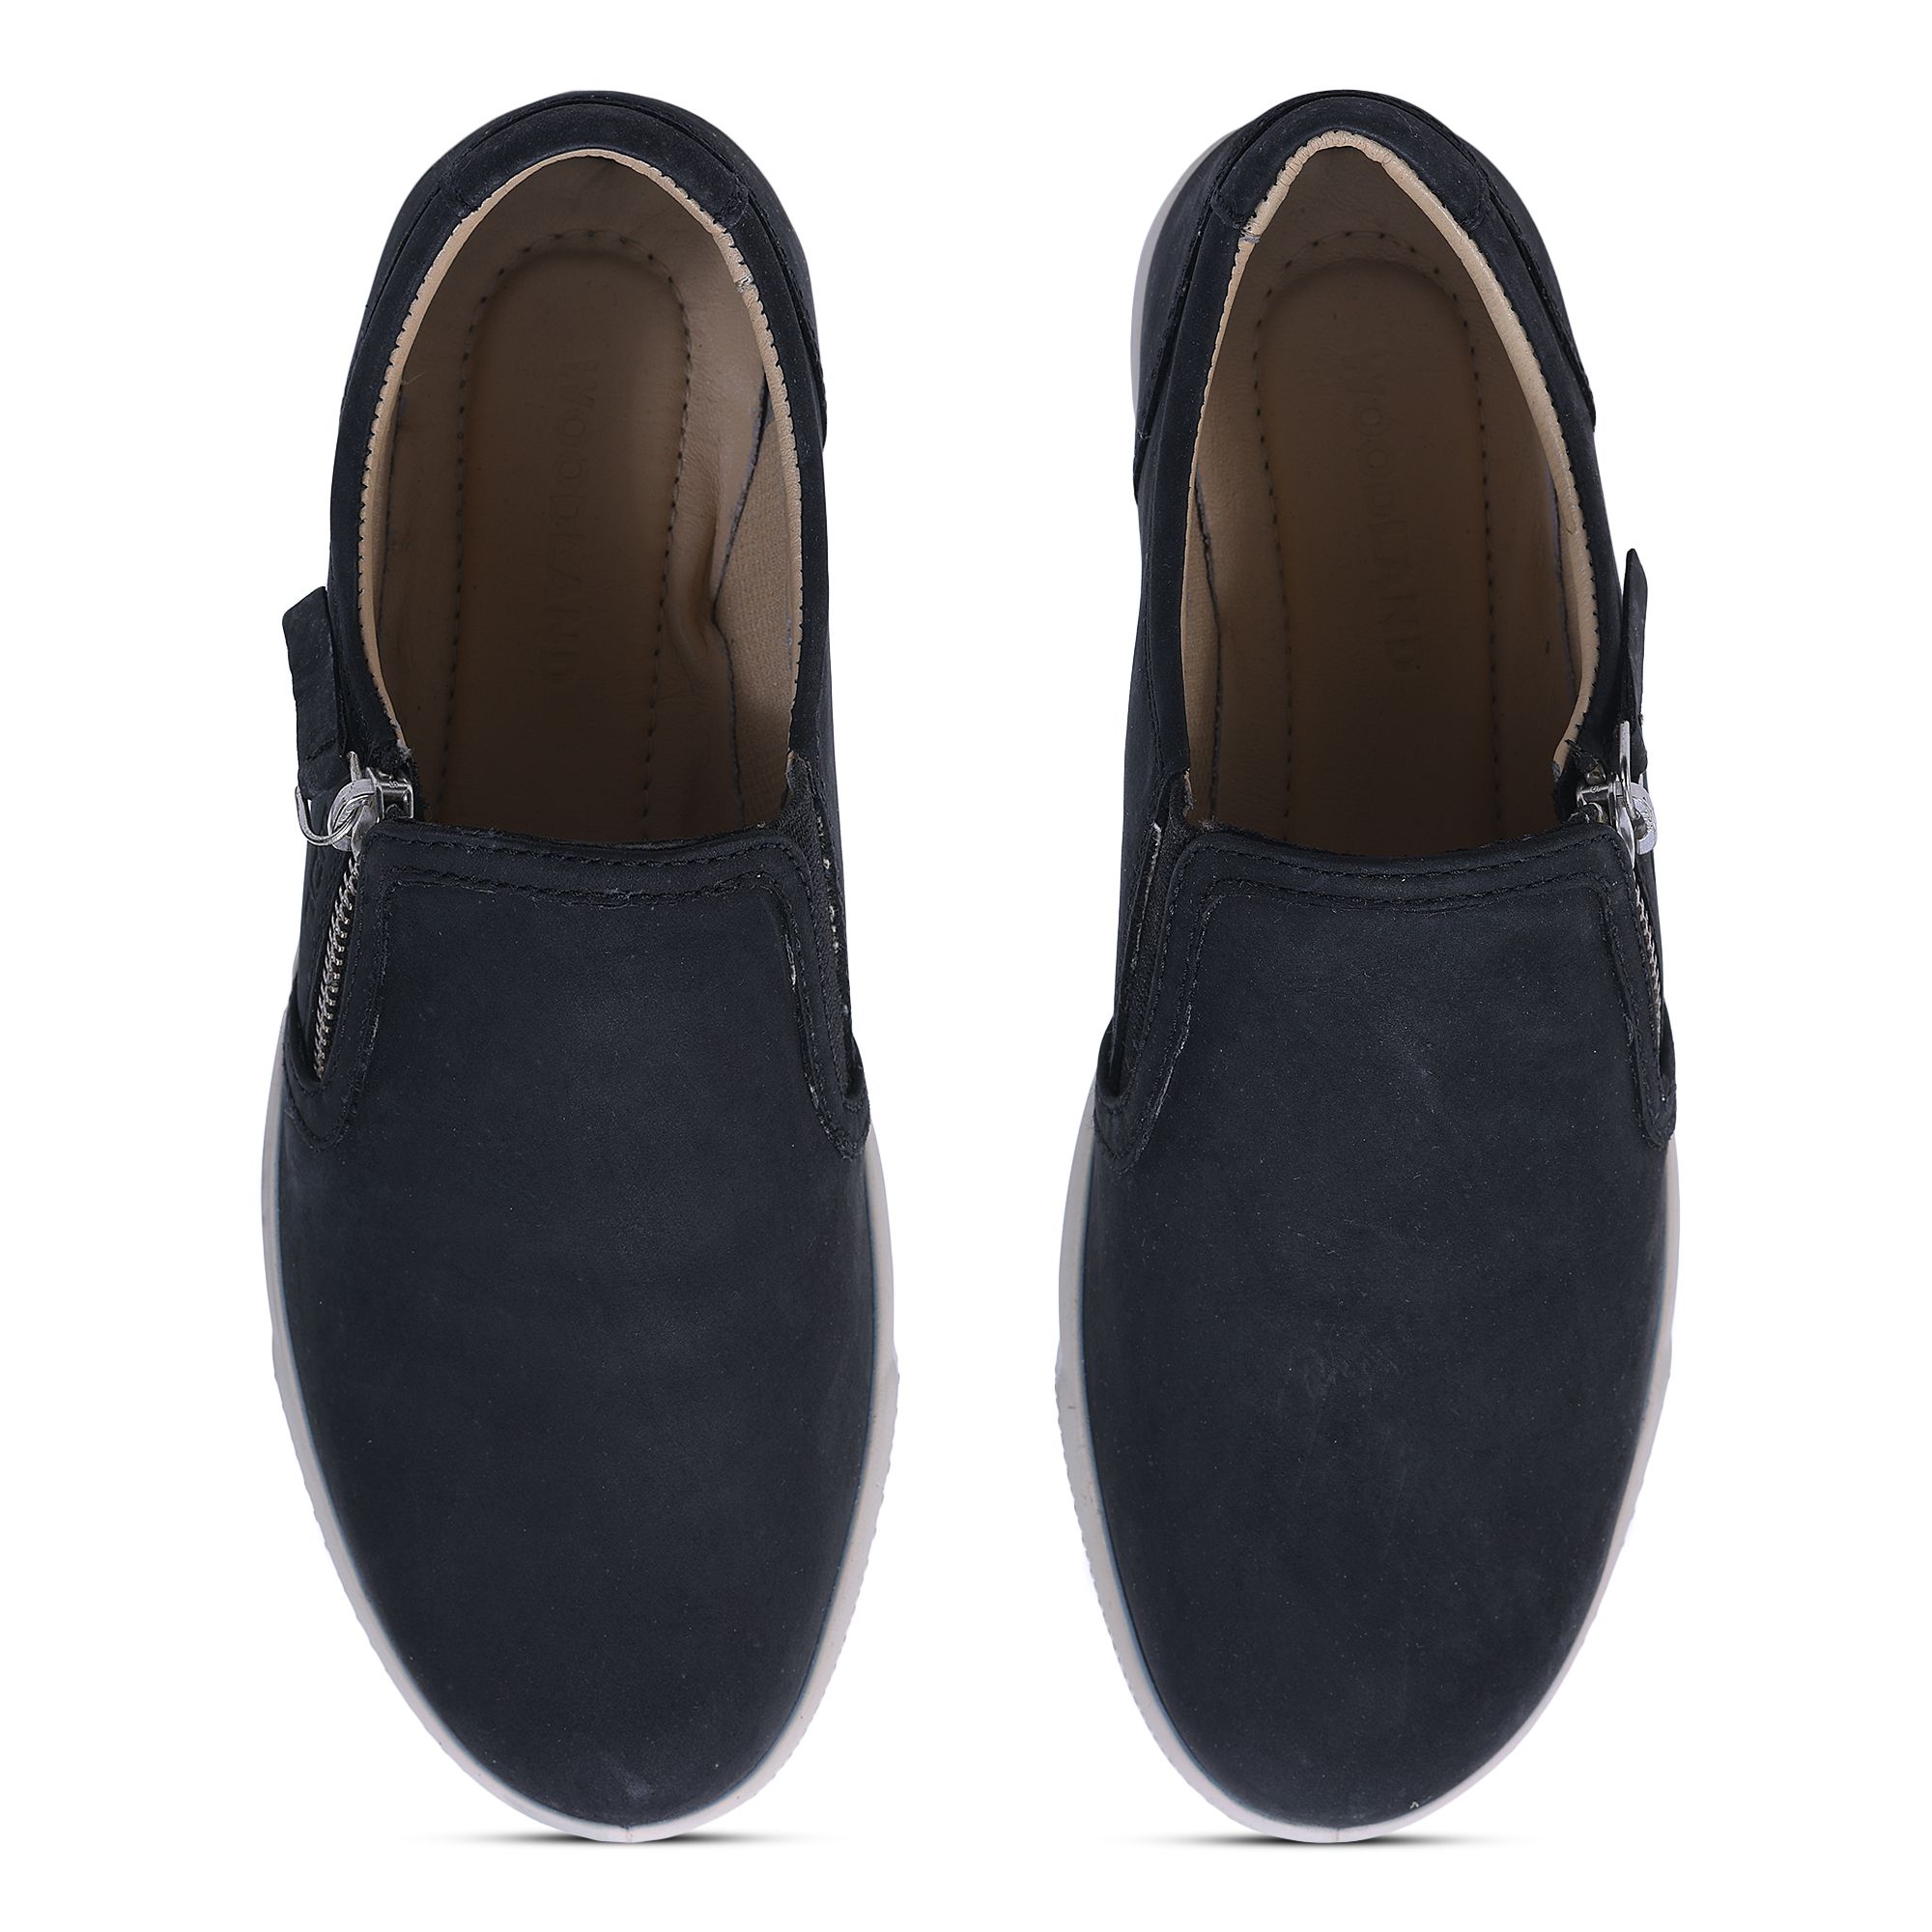 Woodland black Slip-on shoes for women